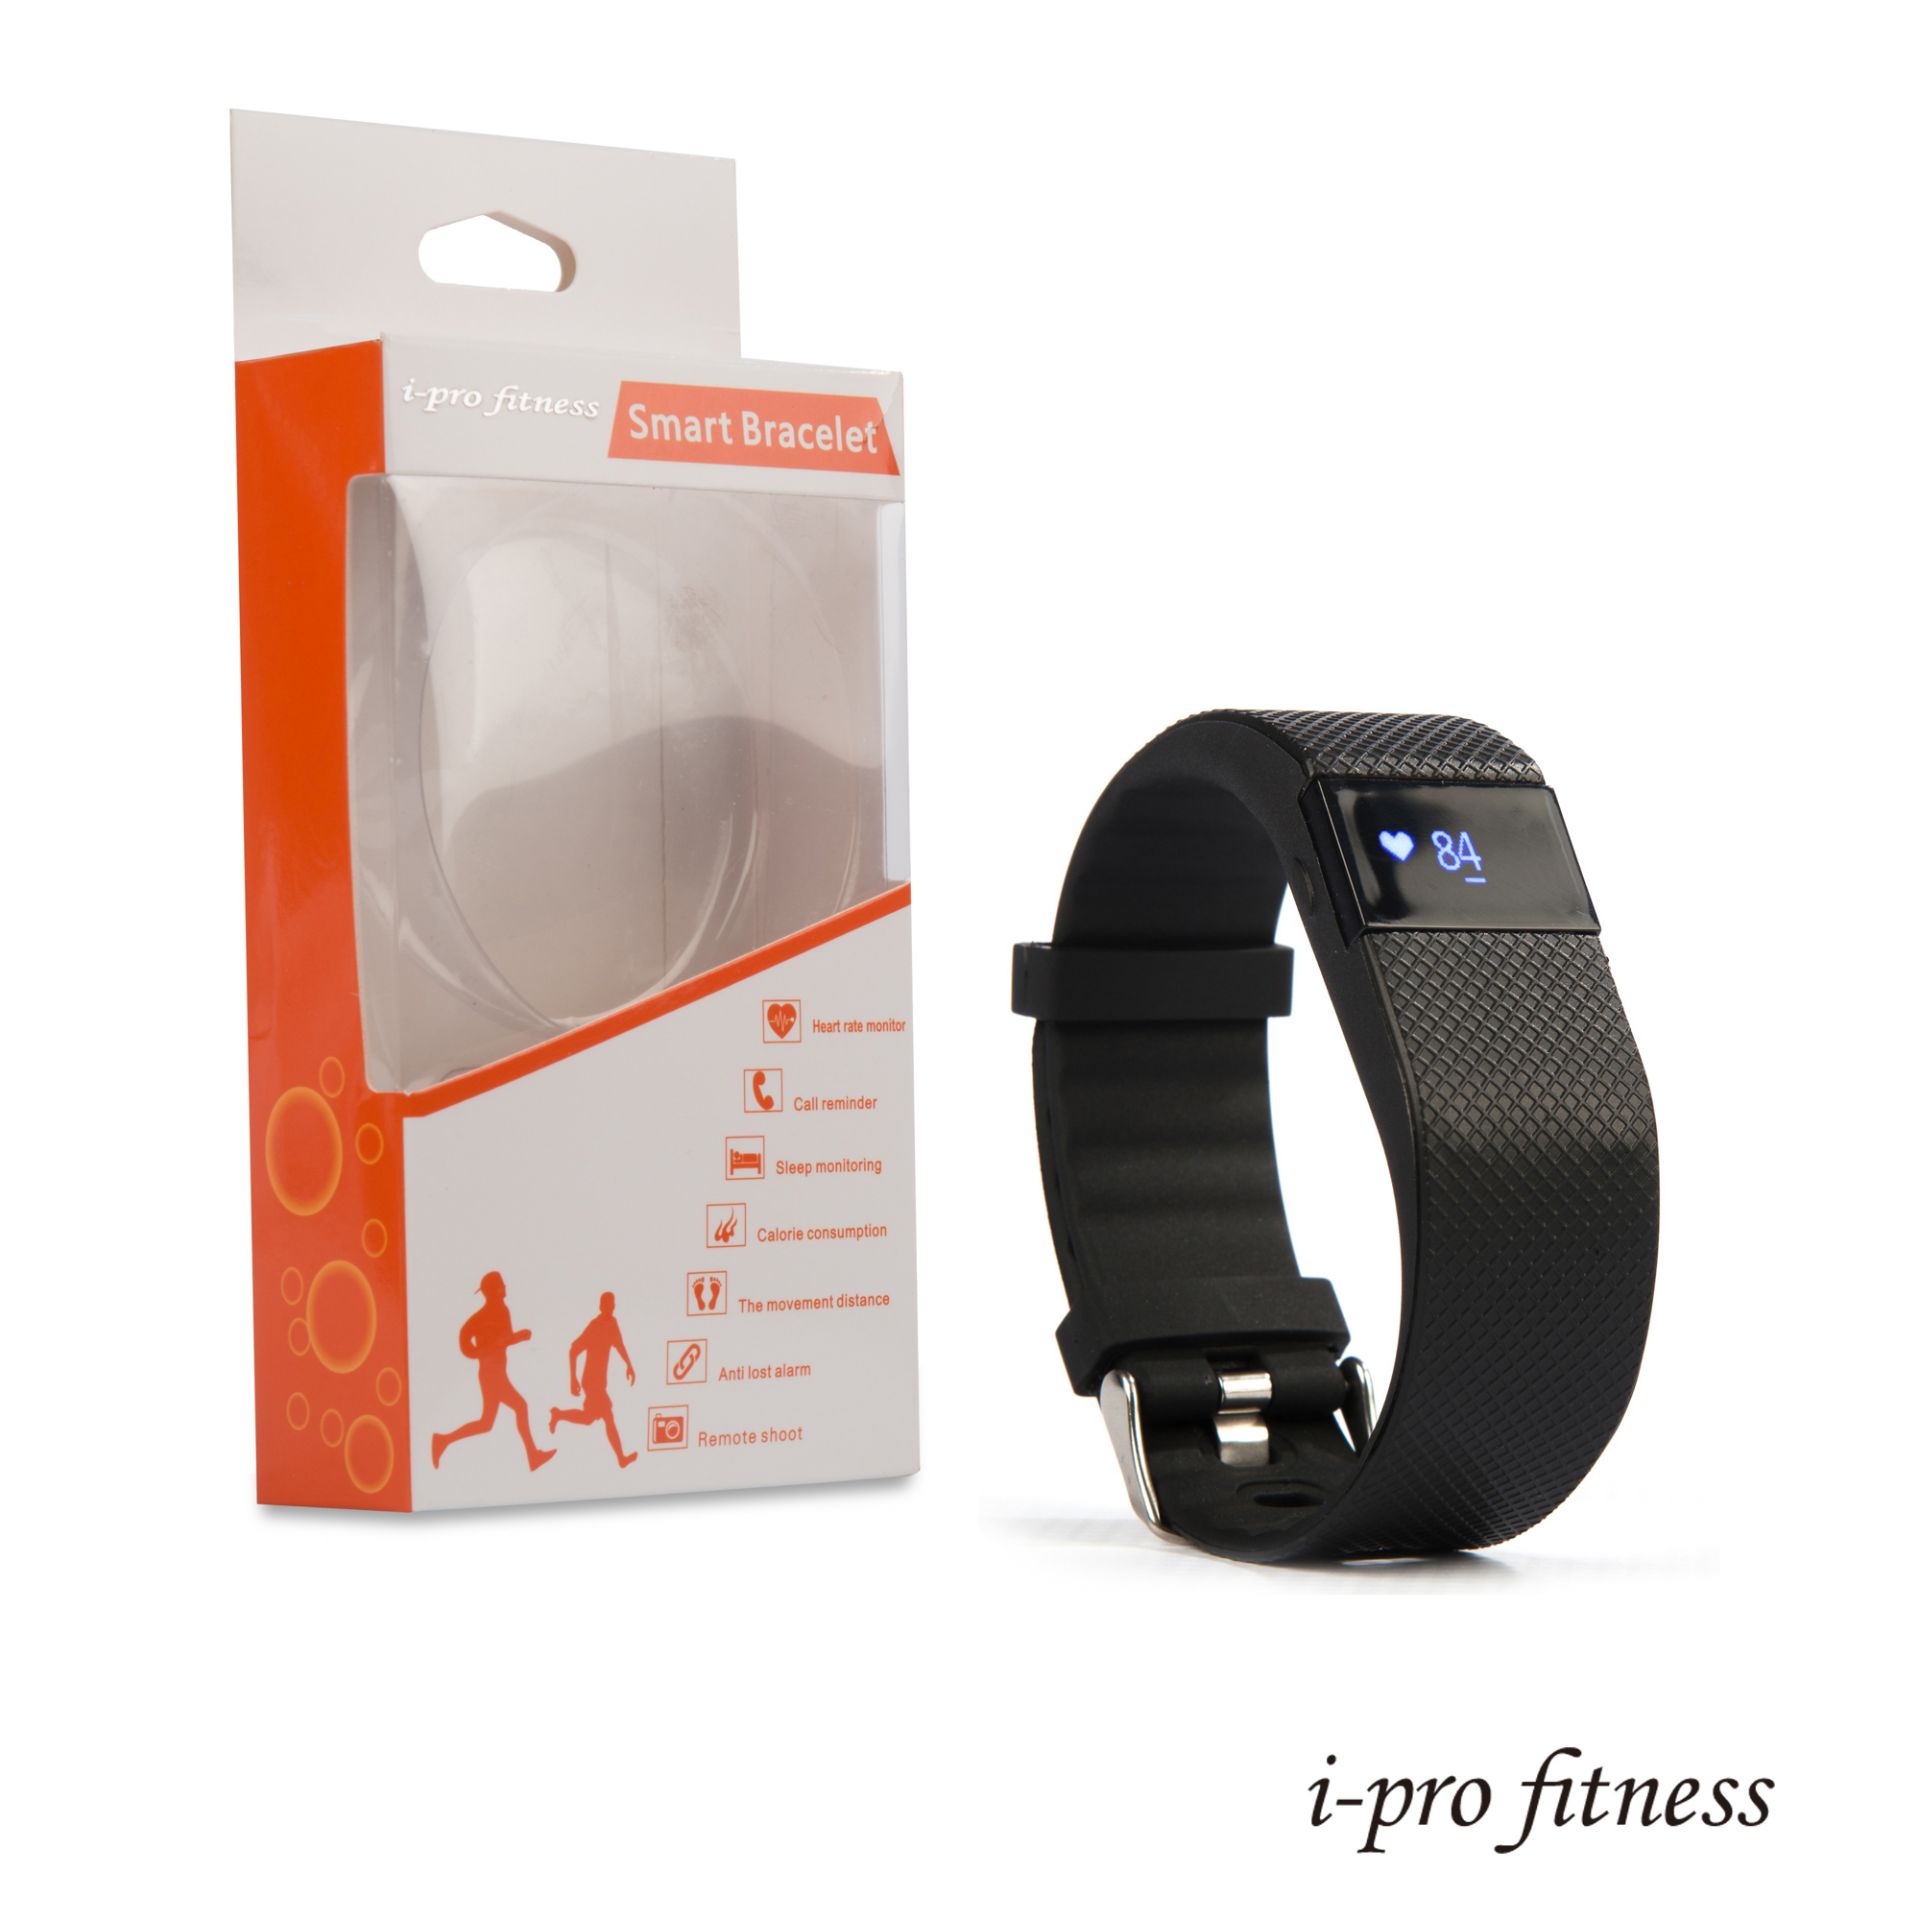 20x Fitness Tracker i-pro fitness, Bluetooth 4.0 Sports Smart Bracelet, Heart Rate Monitor, - Image 2 of 8